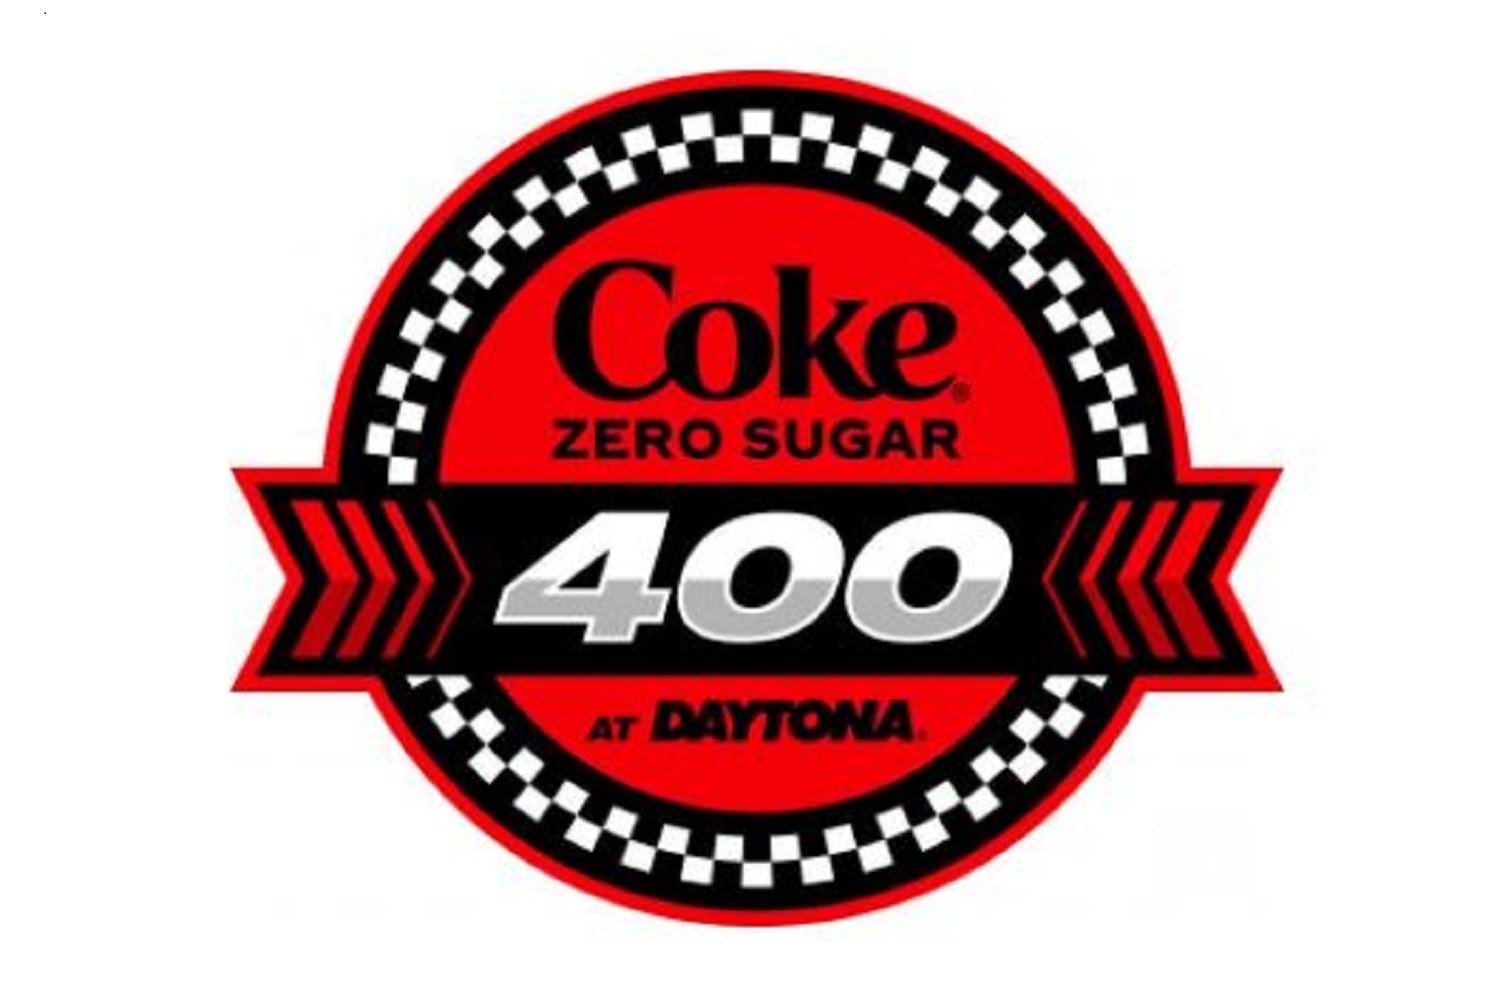 COKE ZERO SUGAR 400 logo